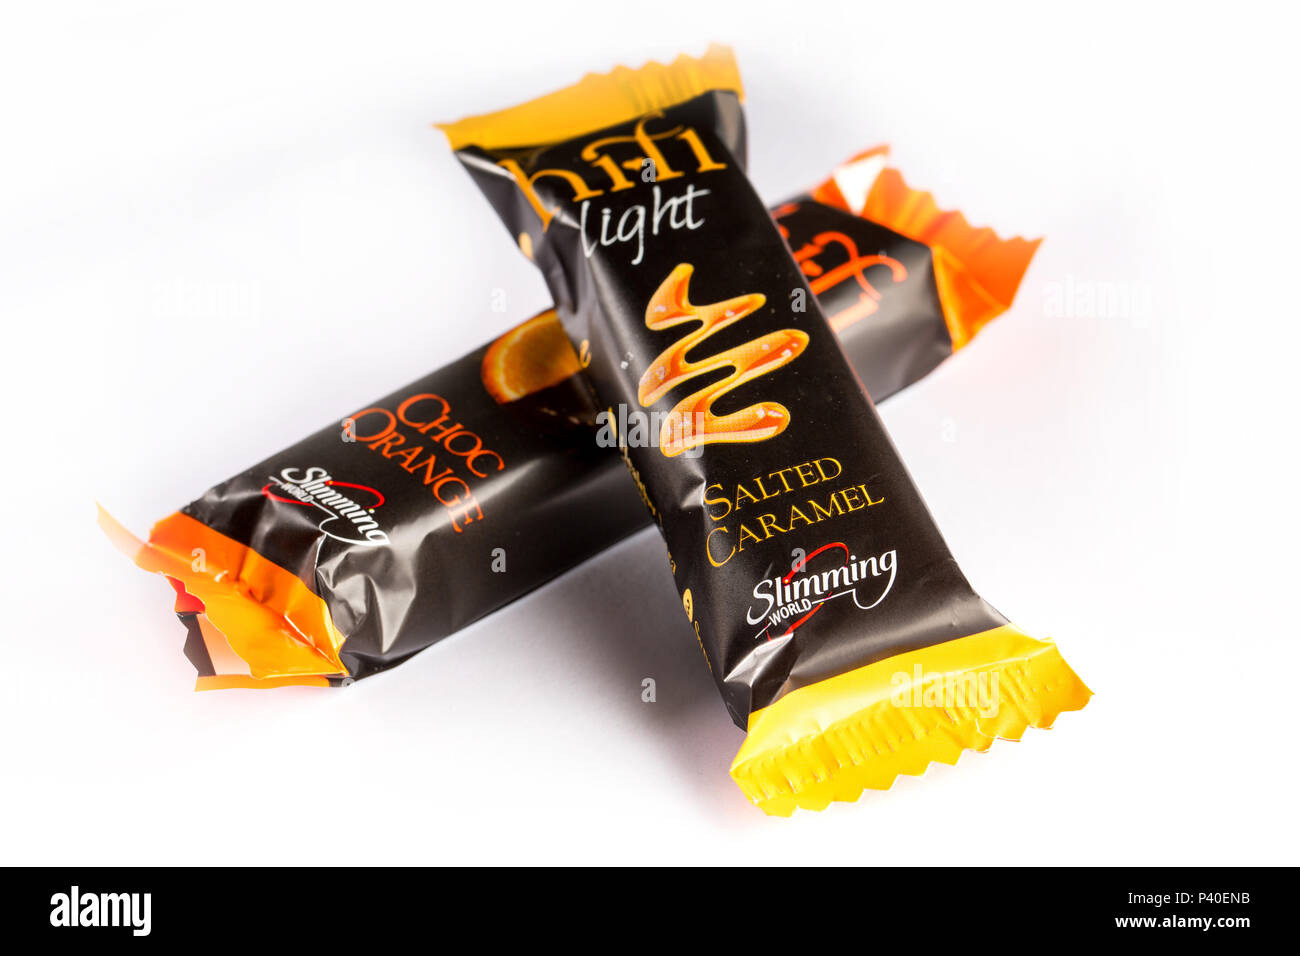 Slimming World snack bars Stock Photo